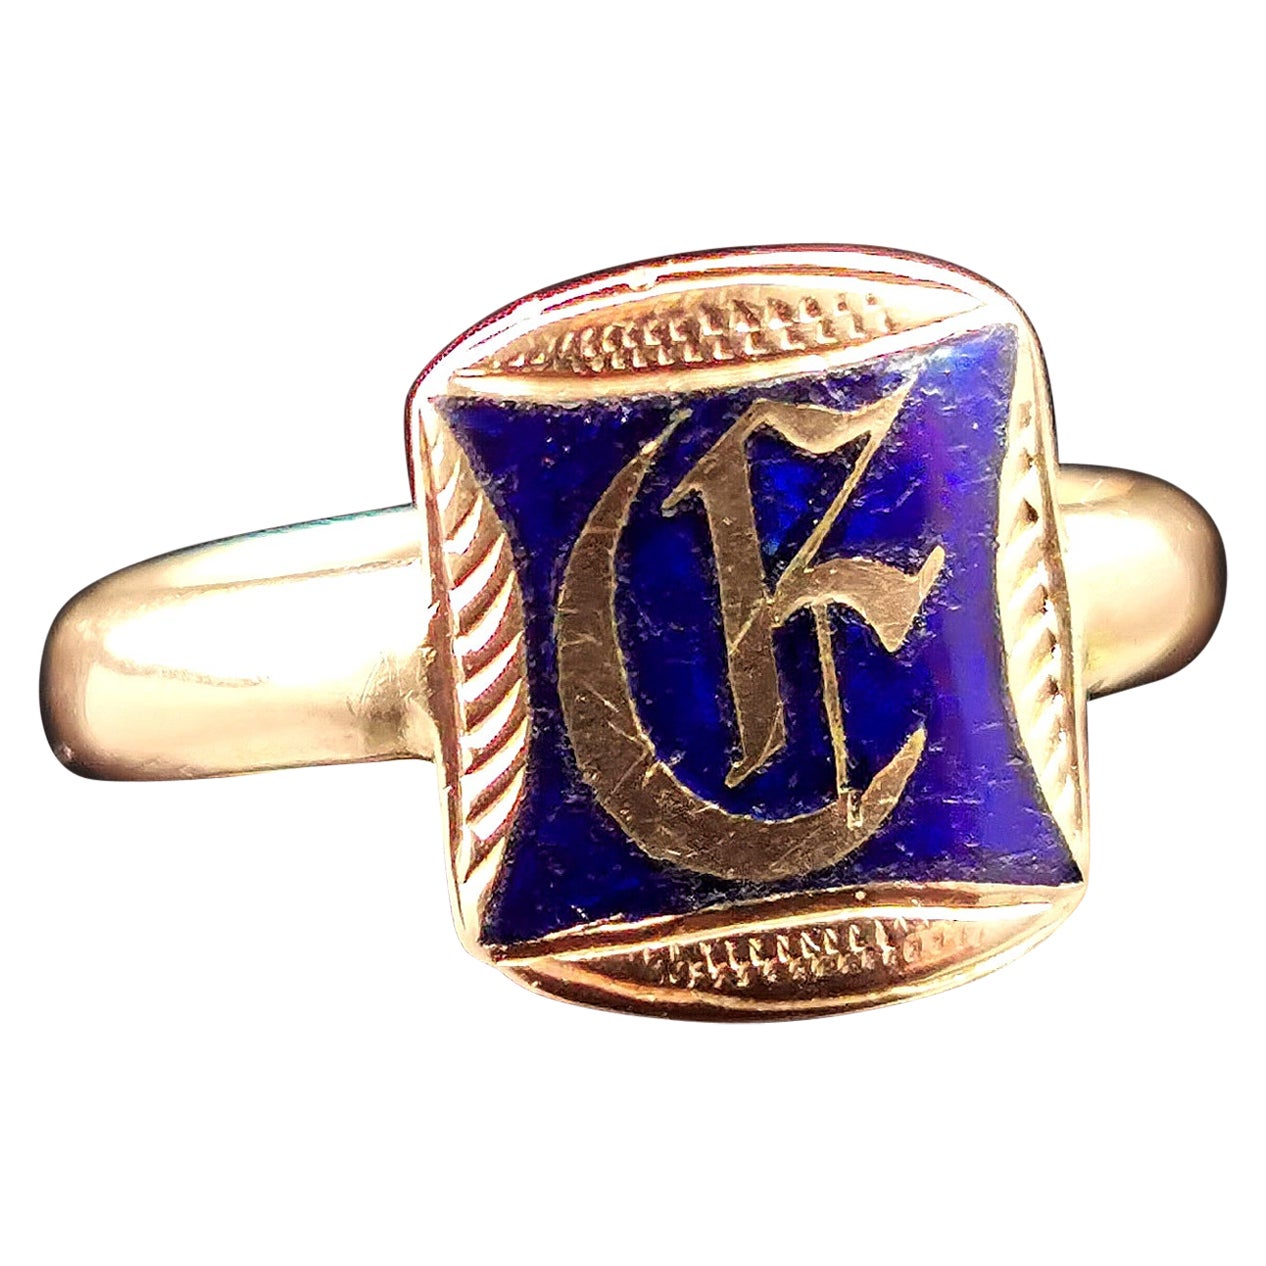 Antique 15k Rose Gold Monogram Signet Ring, Blue Enamel